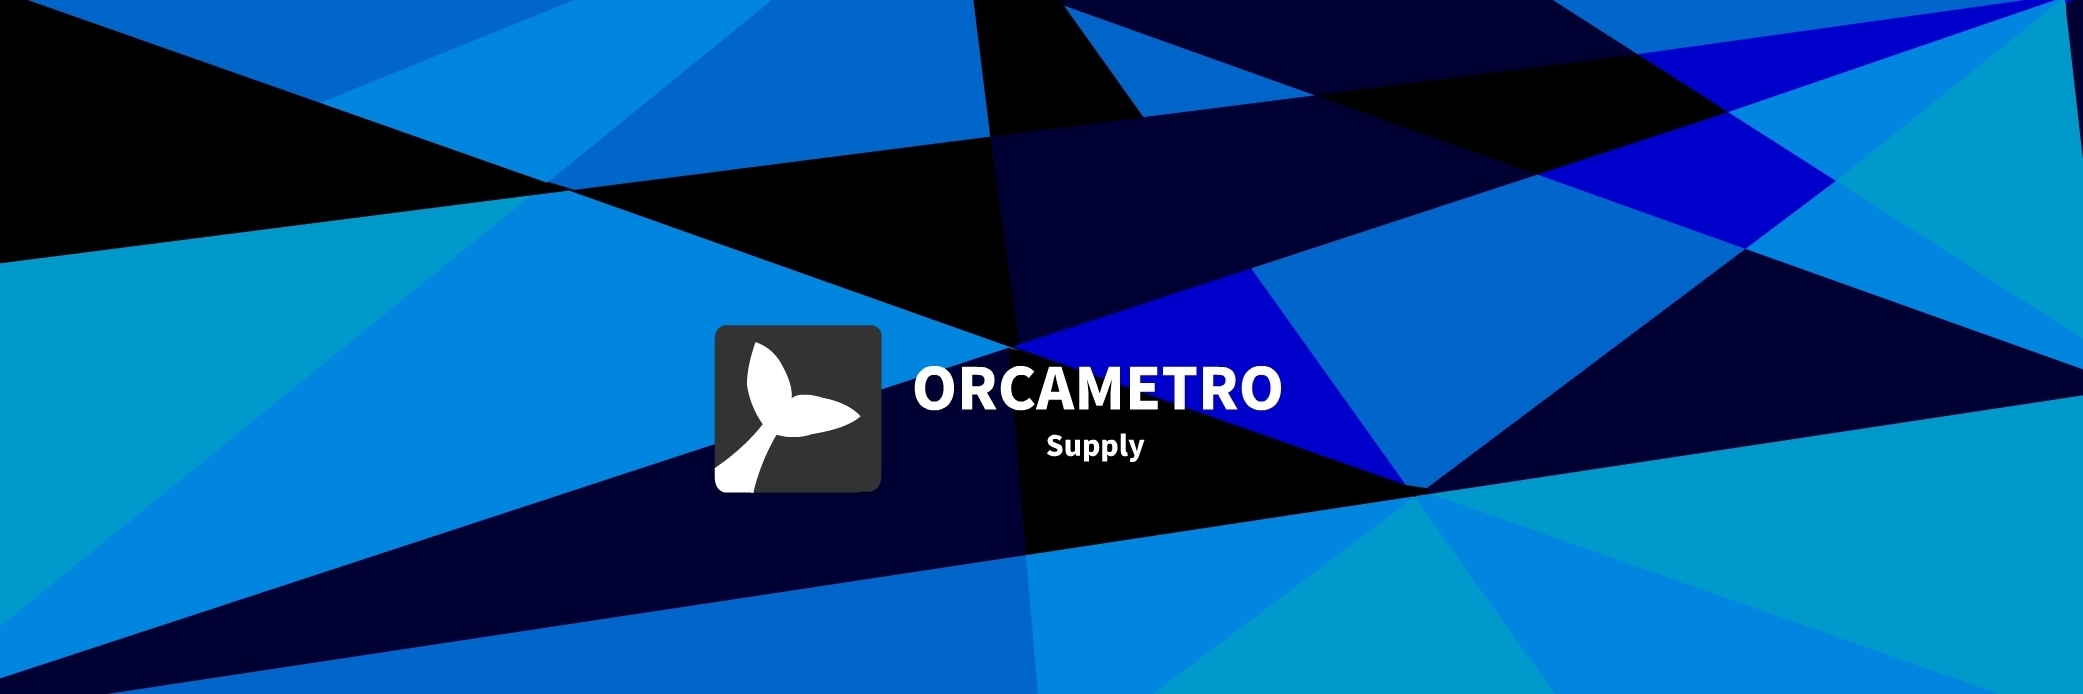 ORCAMETRO Supply